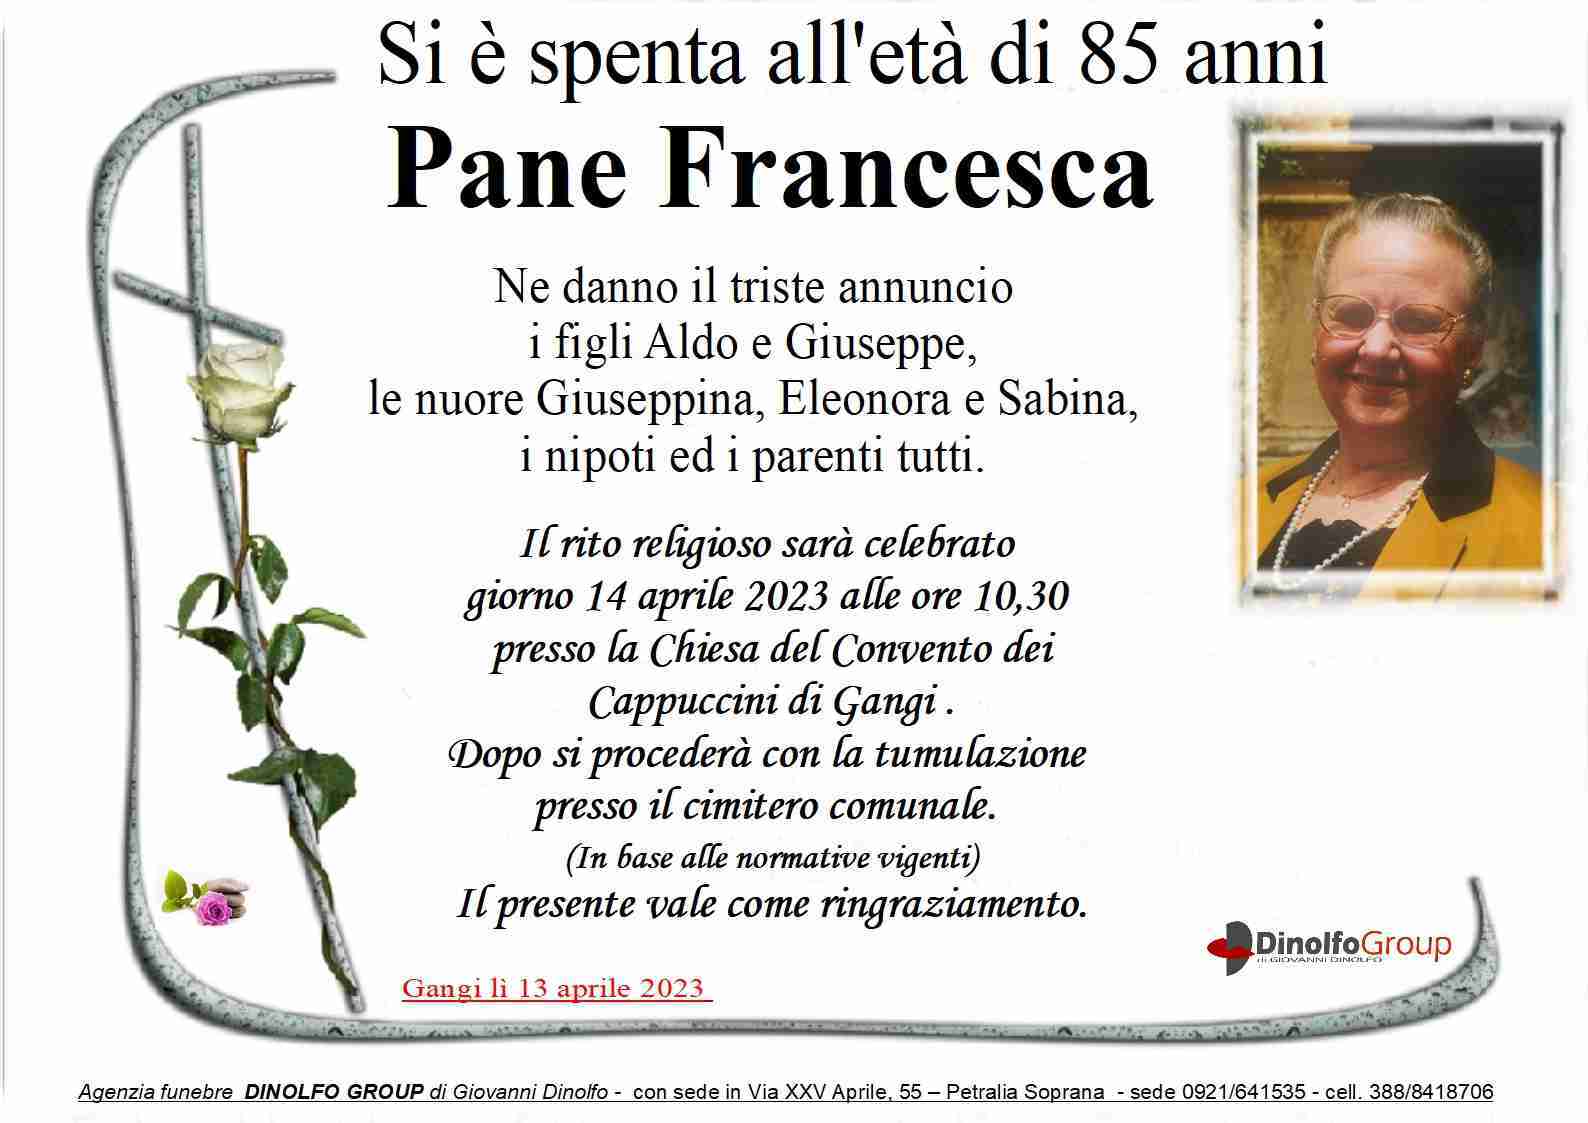 Francesca Pane